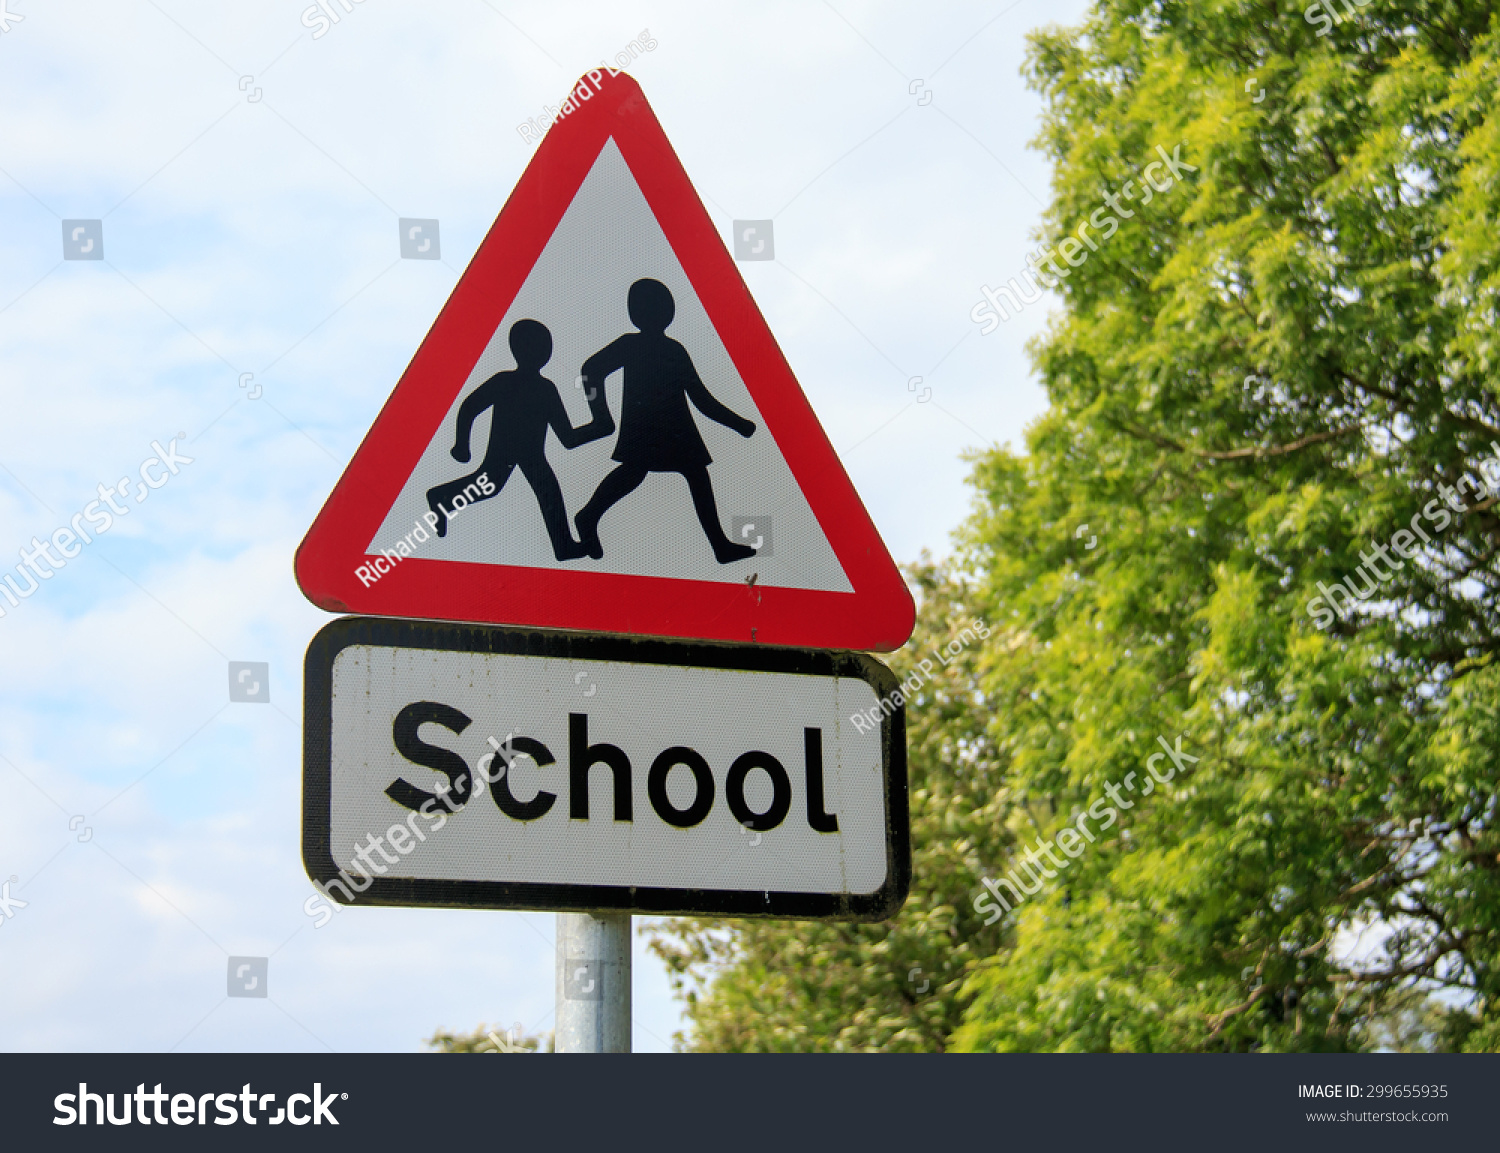 School Sign Stock Photo 299655935 : Shutterstock